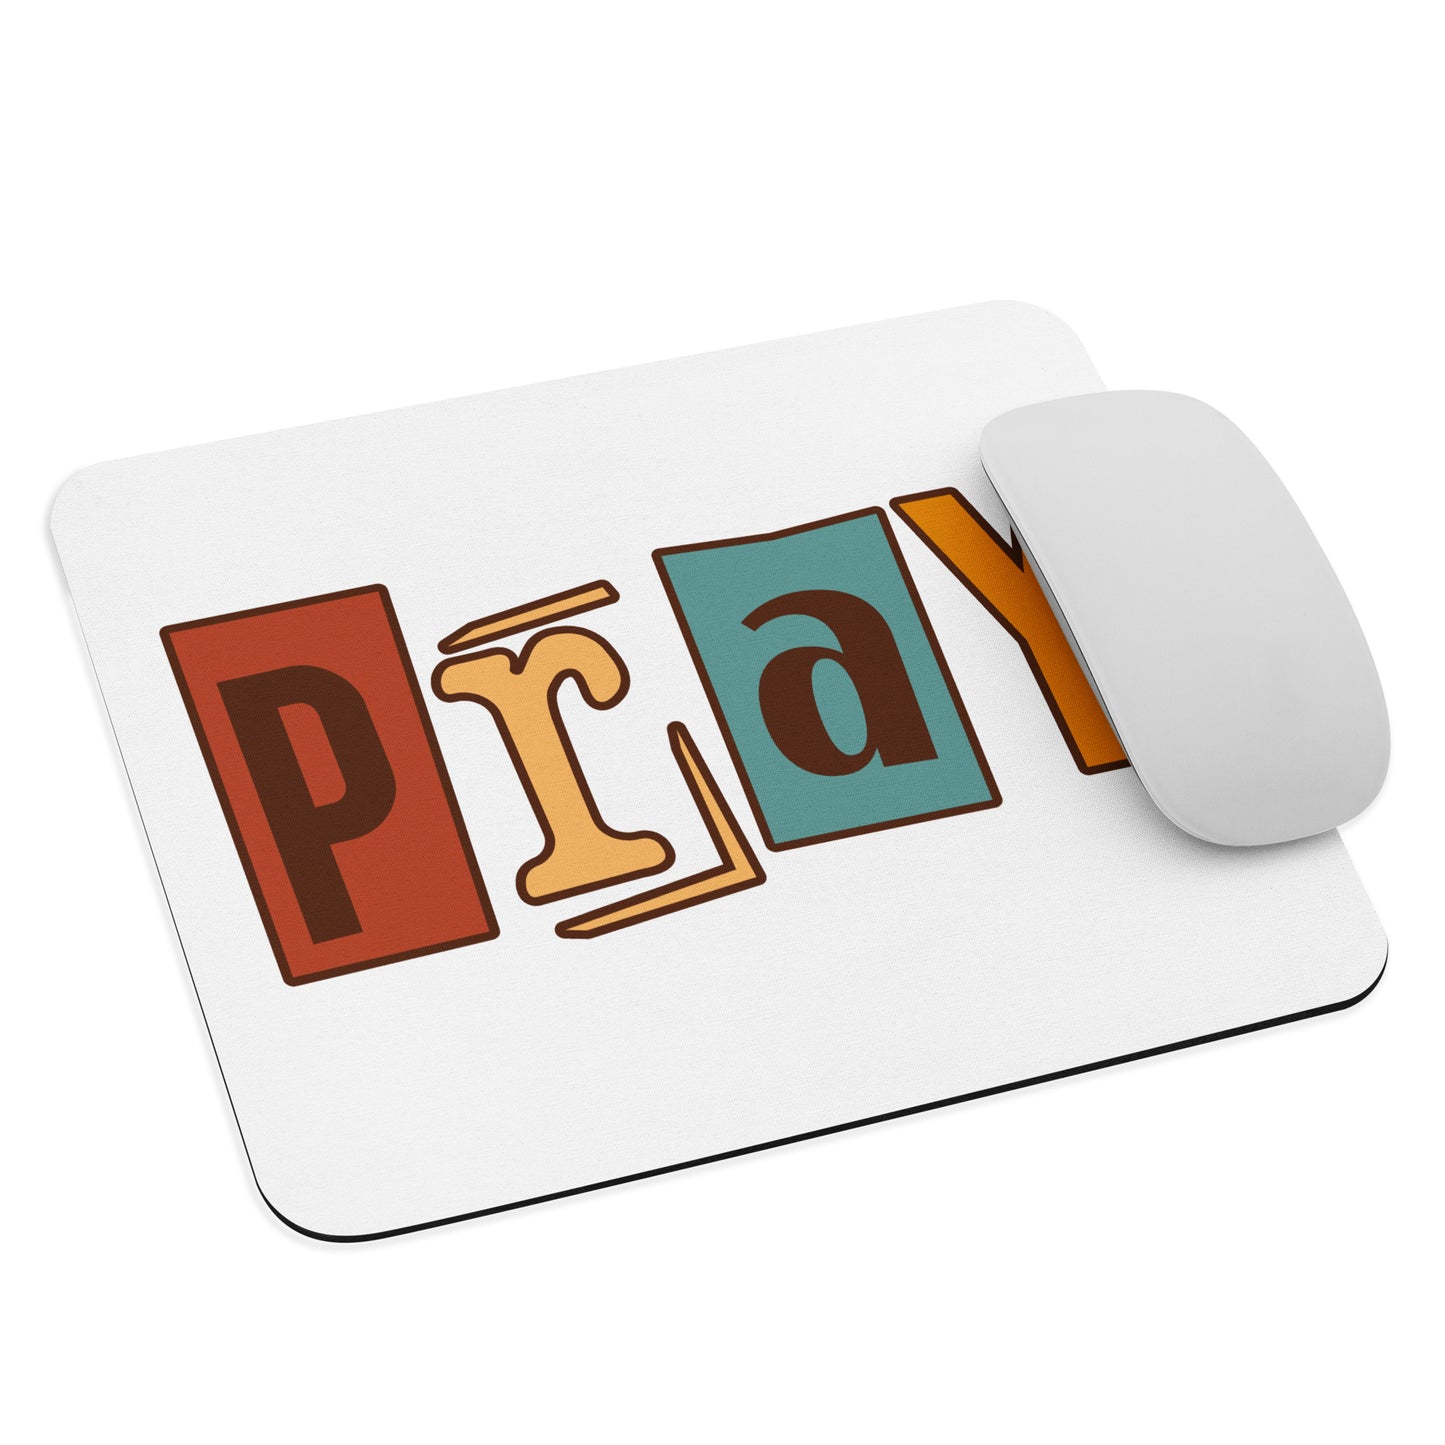 Pray Mouse Pad